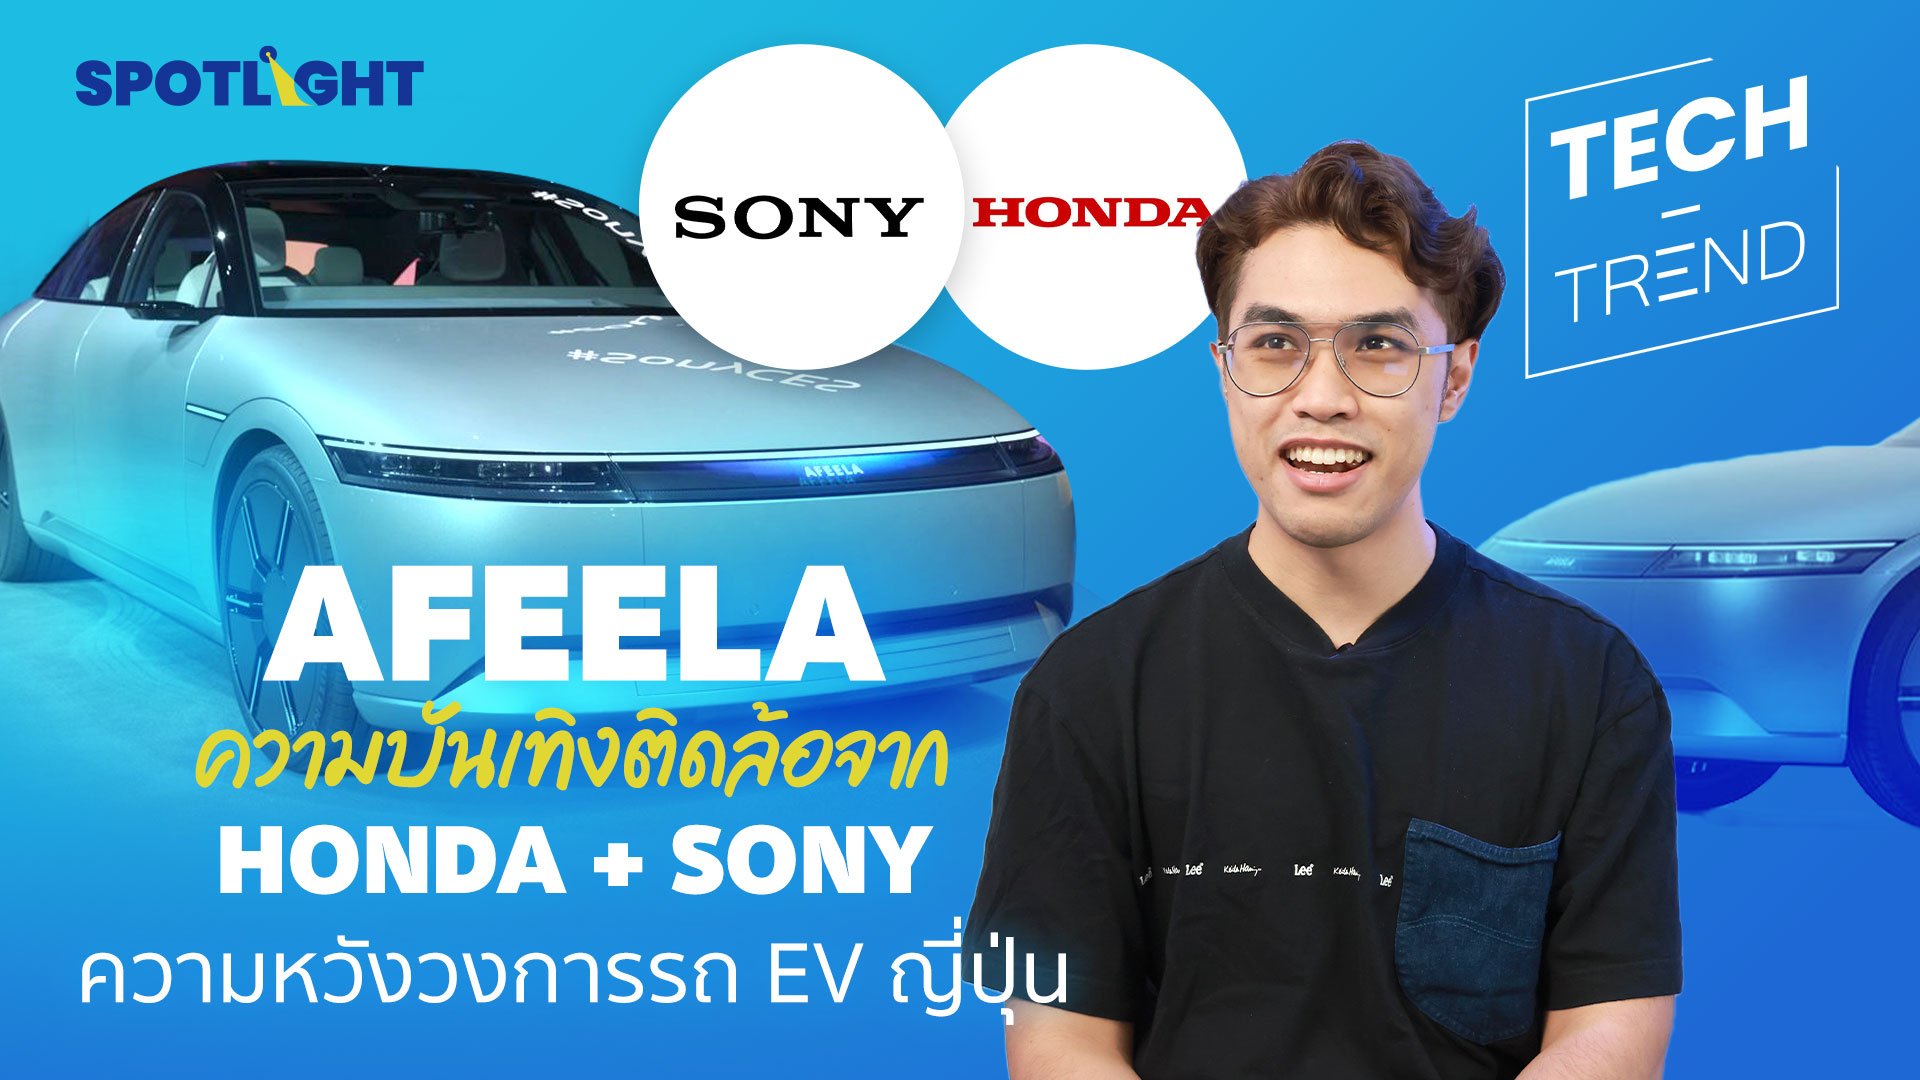 ‘AFEELA’ ความบันเทิงติดล้อจาก HONDA + SONY ความหวังวงการรถ EV ญี่ปุ่น  | Spotlight | 18 ม.ค. 66 | AMARIN TVHD34